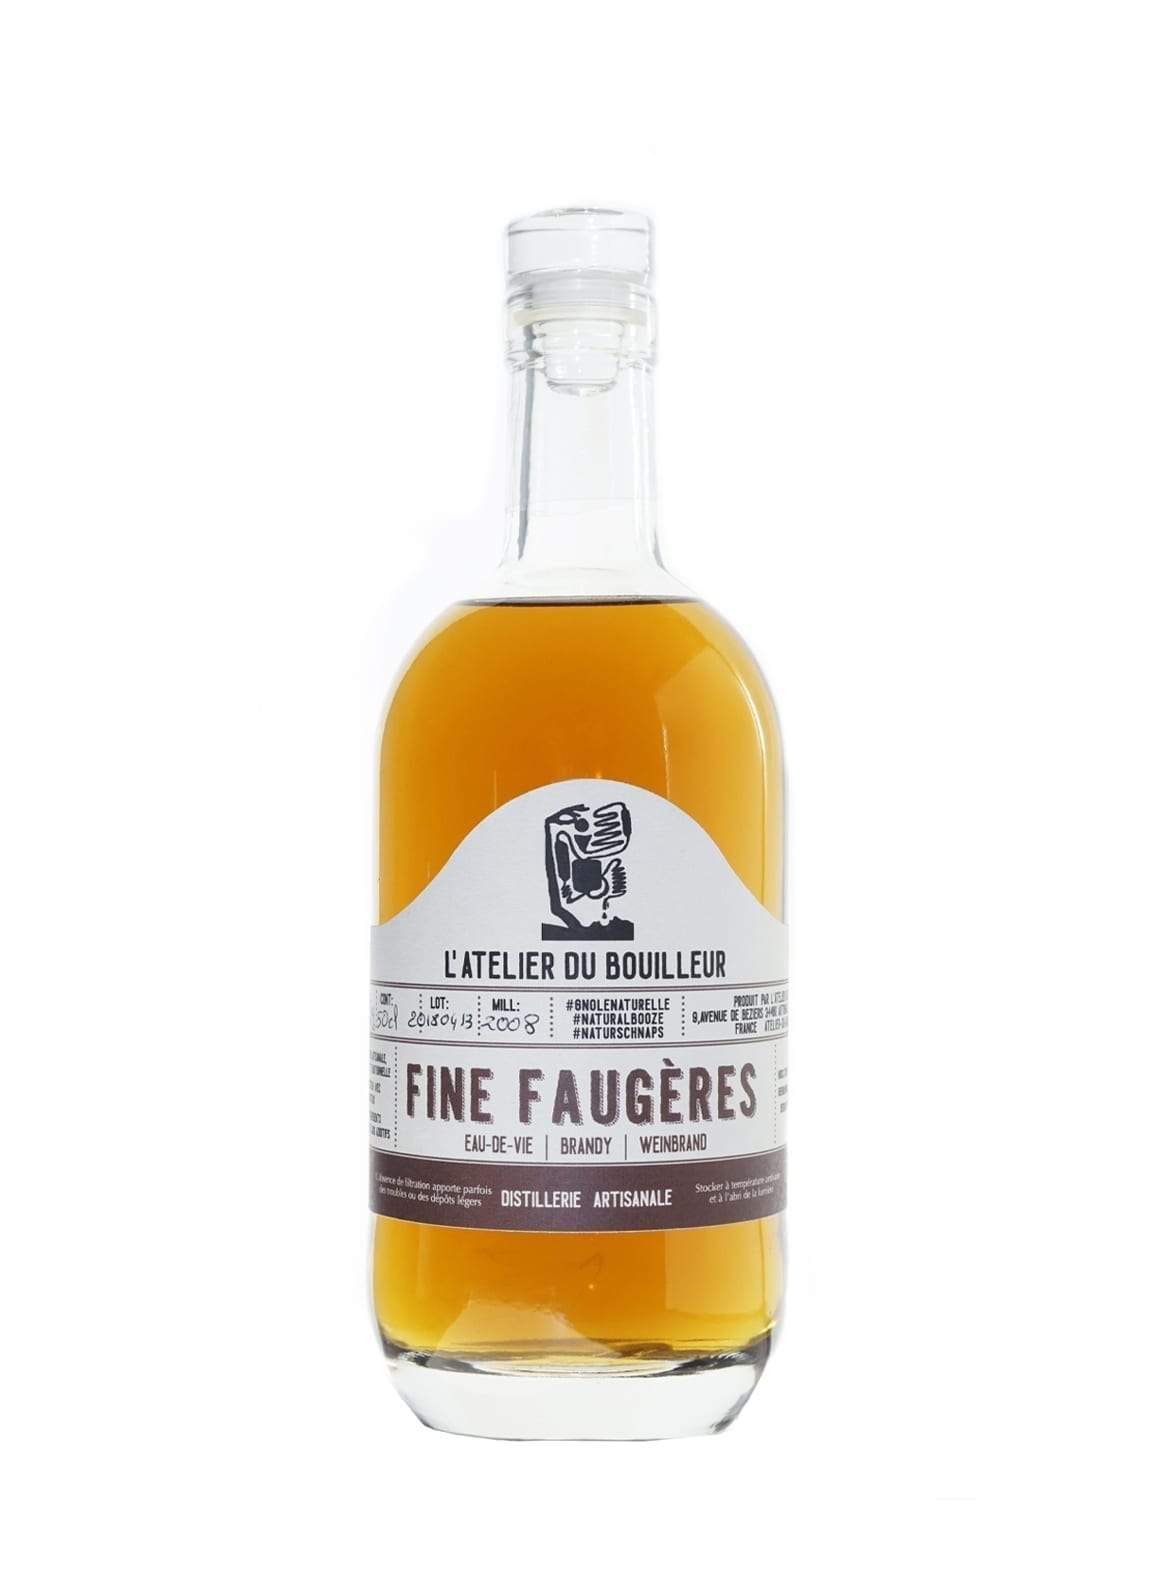 Bouilleur Fine de Faugeres 5-11 years 43.5%% 500ml | Whiskey | Shop online at Spirits of France